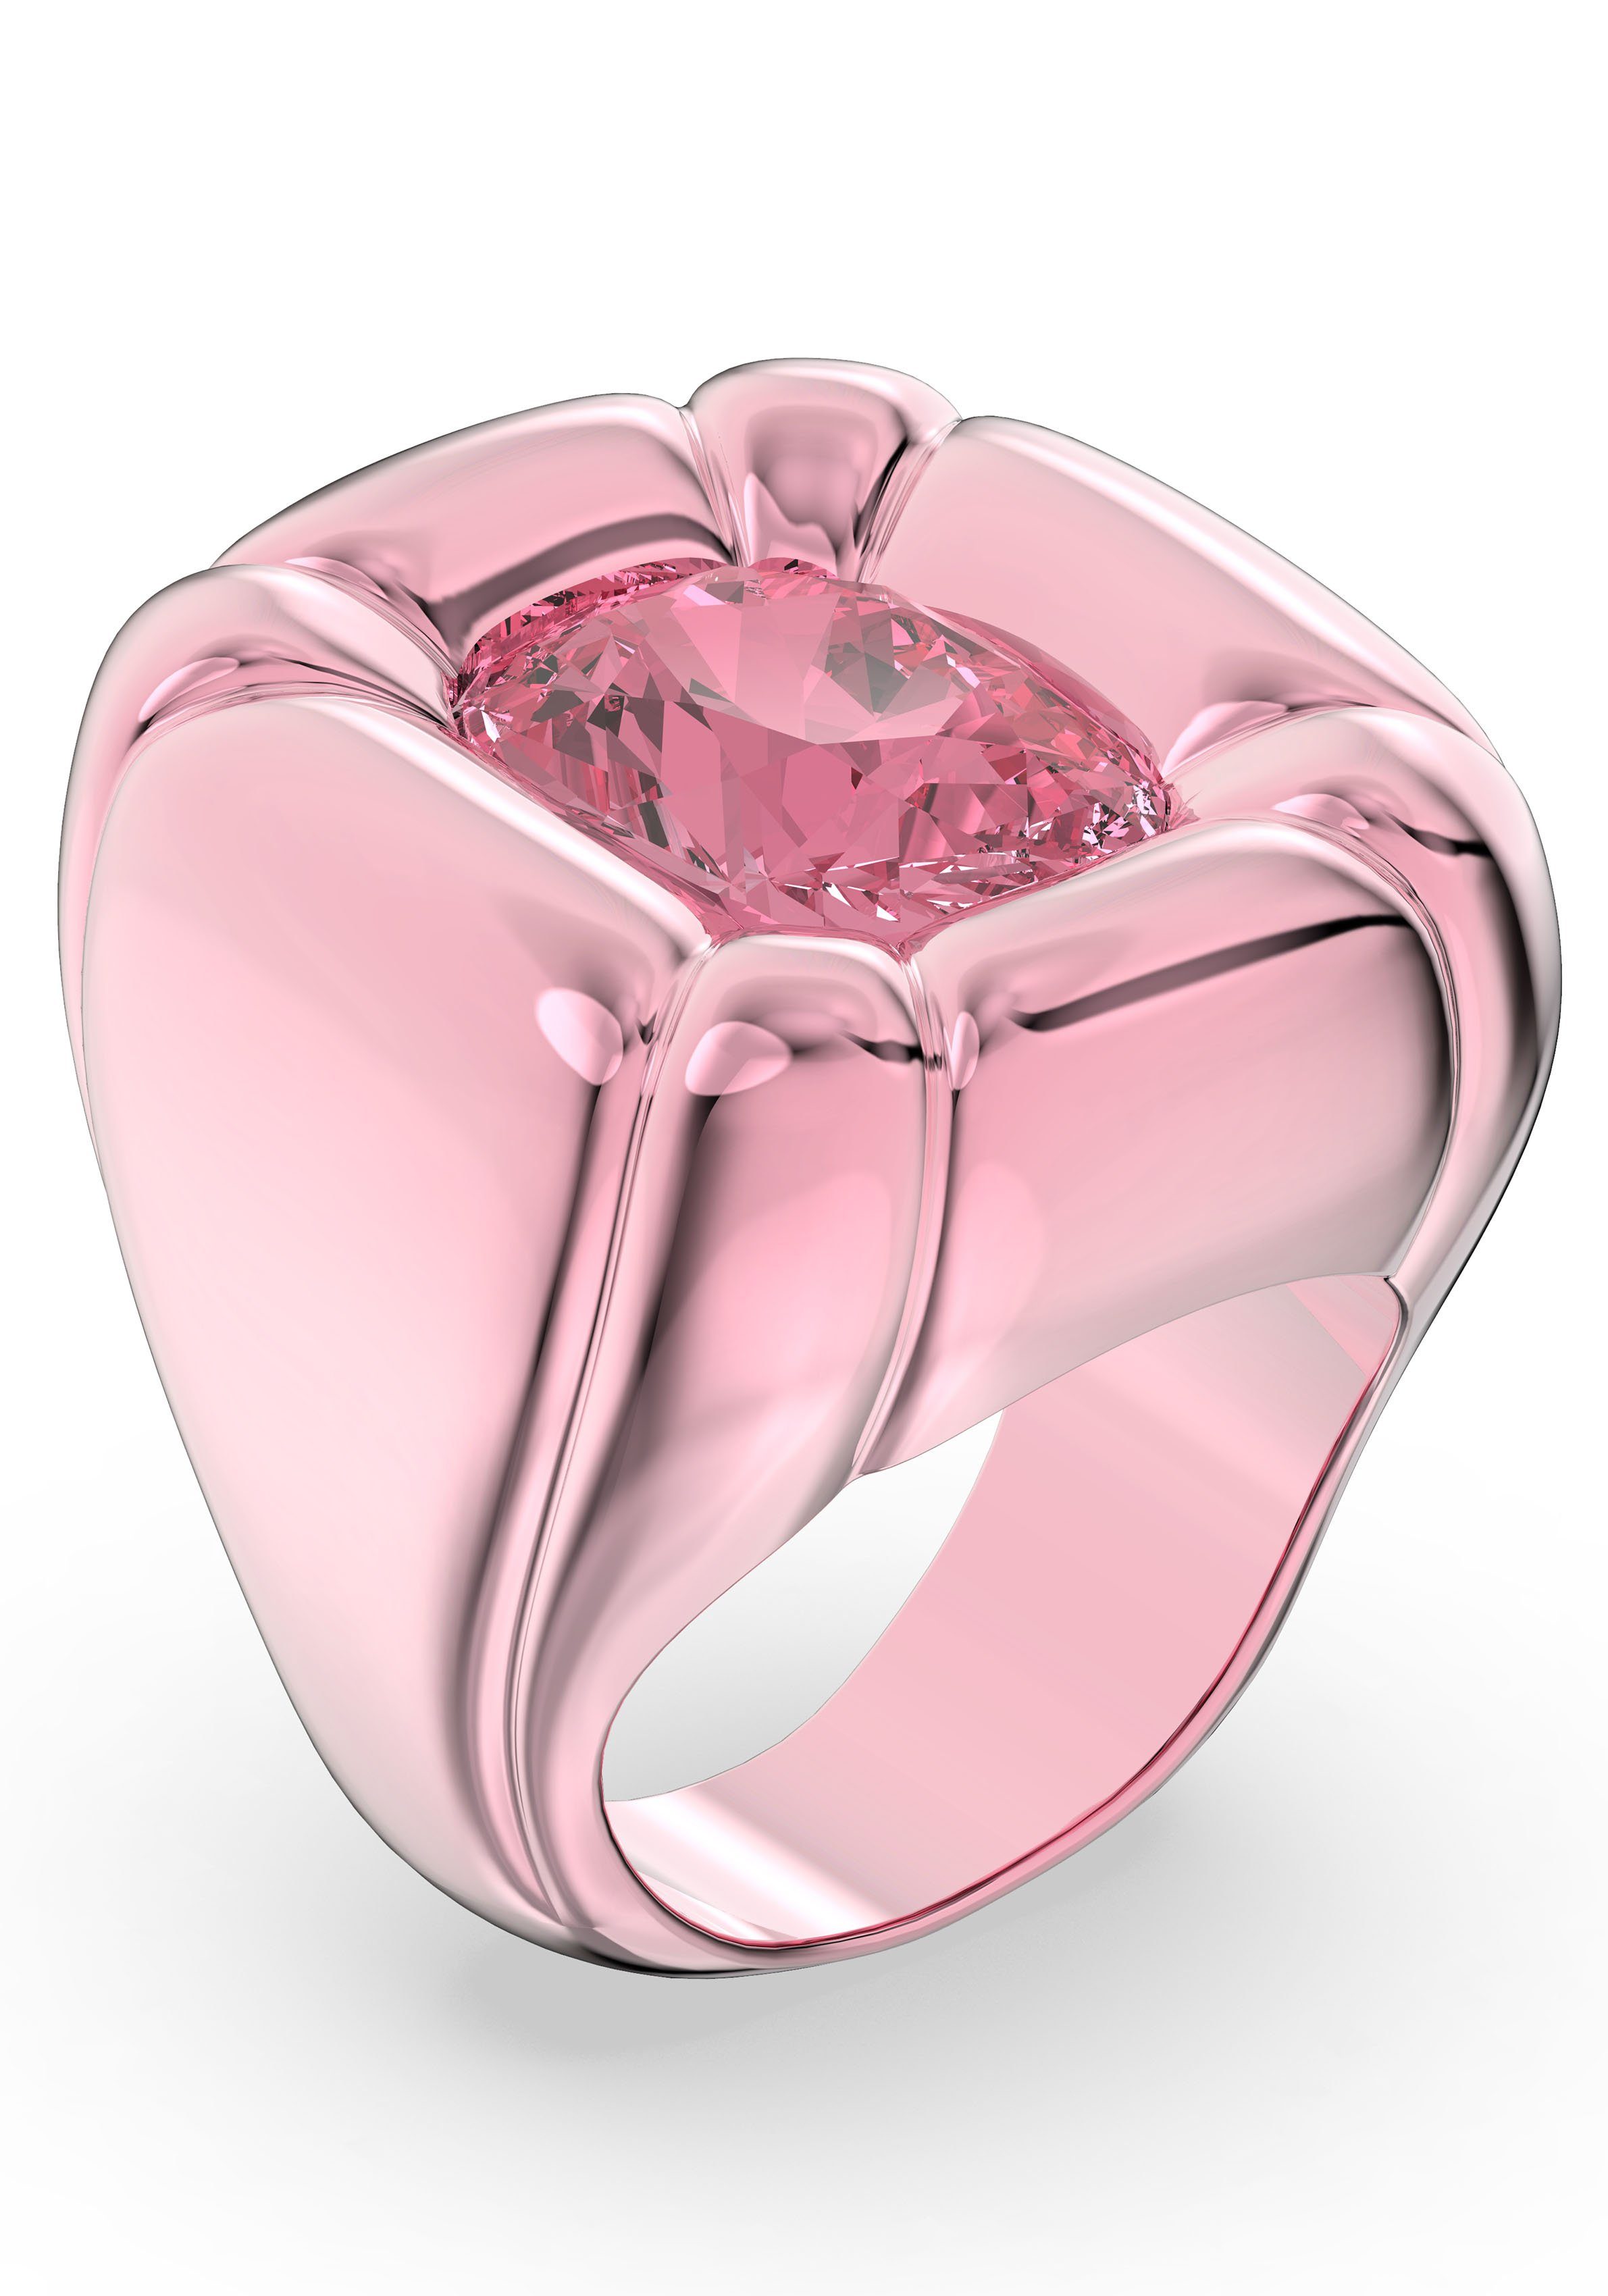 Swarovski Fingerring mit Swarovski® Kristall Ring, Dulcis 5610803,5609721, rosa-pink Cocktail 5610804,5609725